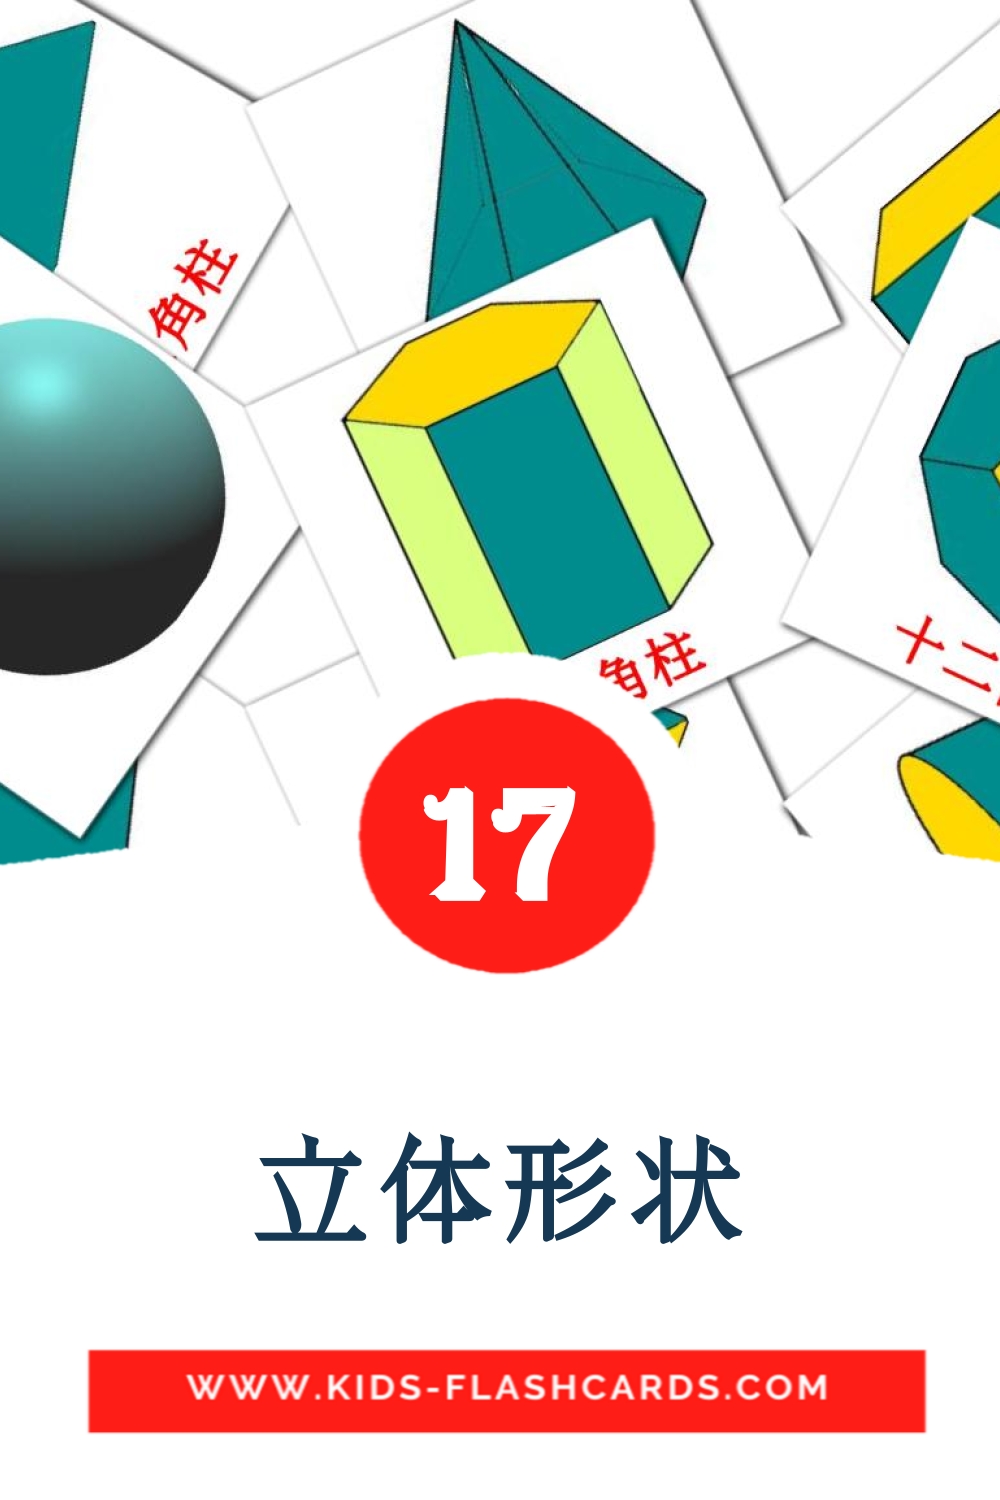 17 立体形状 Bildkarten für den Kindergarten auf Chinesisch(Traditionell)